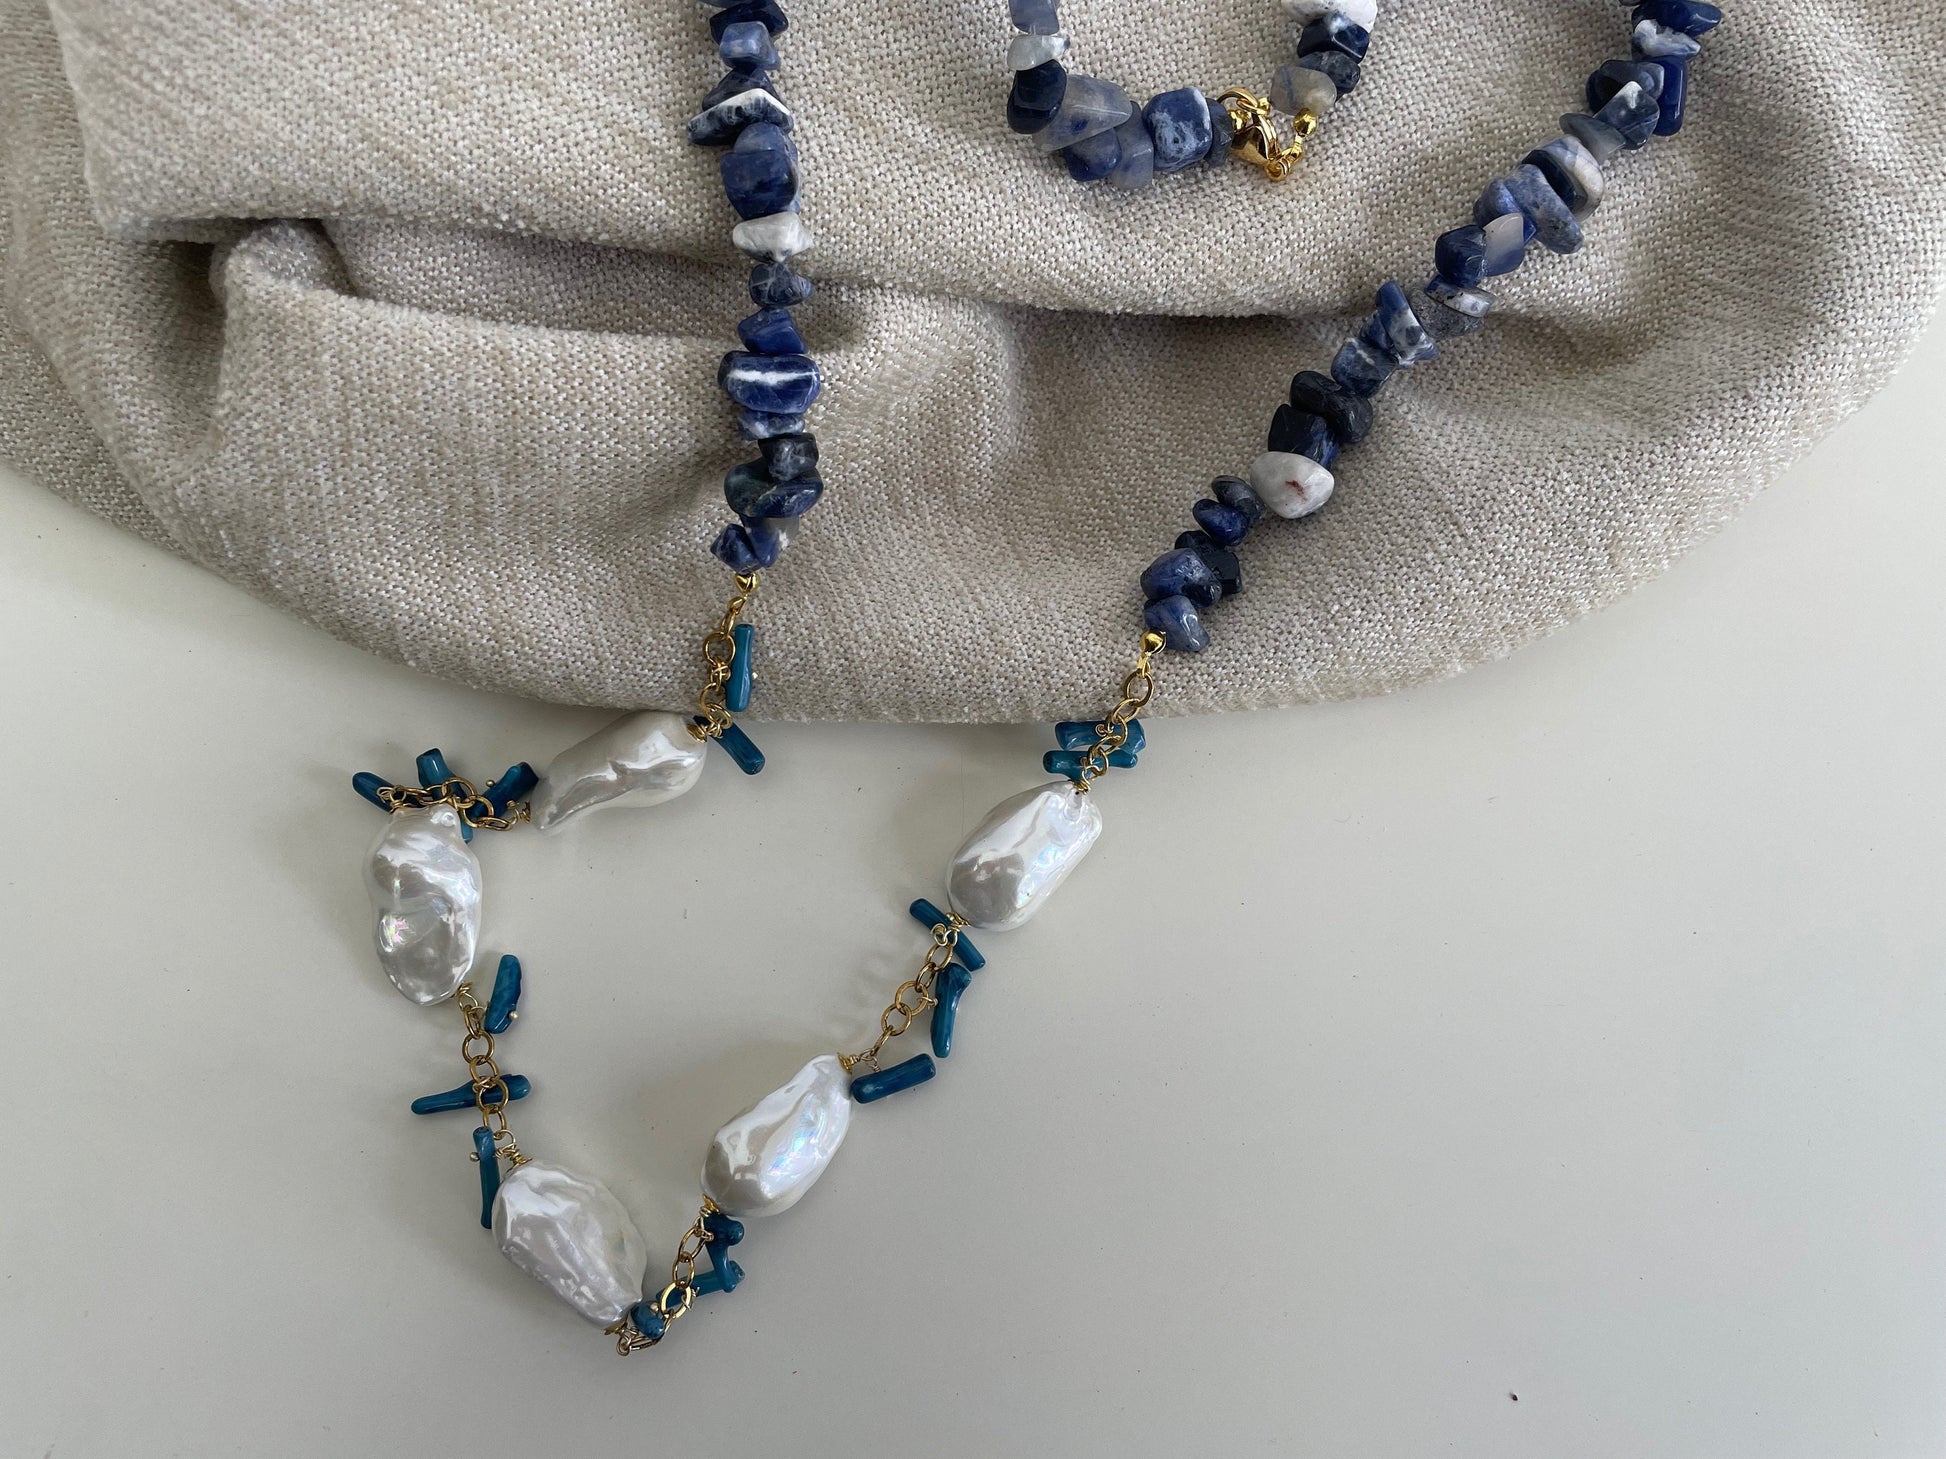 Collana composita, sodalite blu, corallo bambu blu e perle scaramazze.&